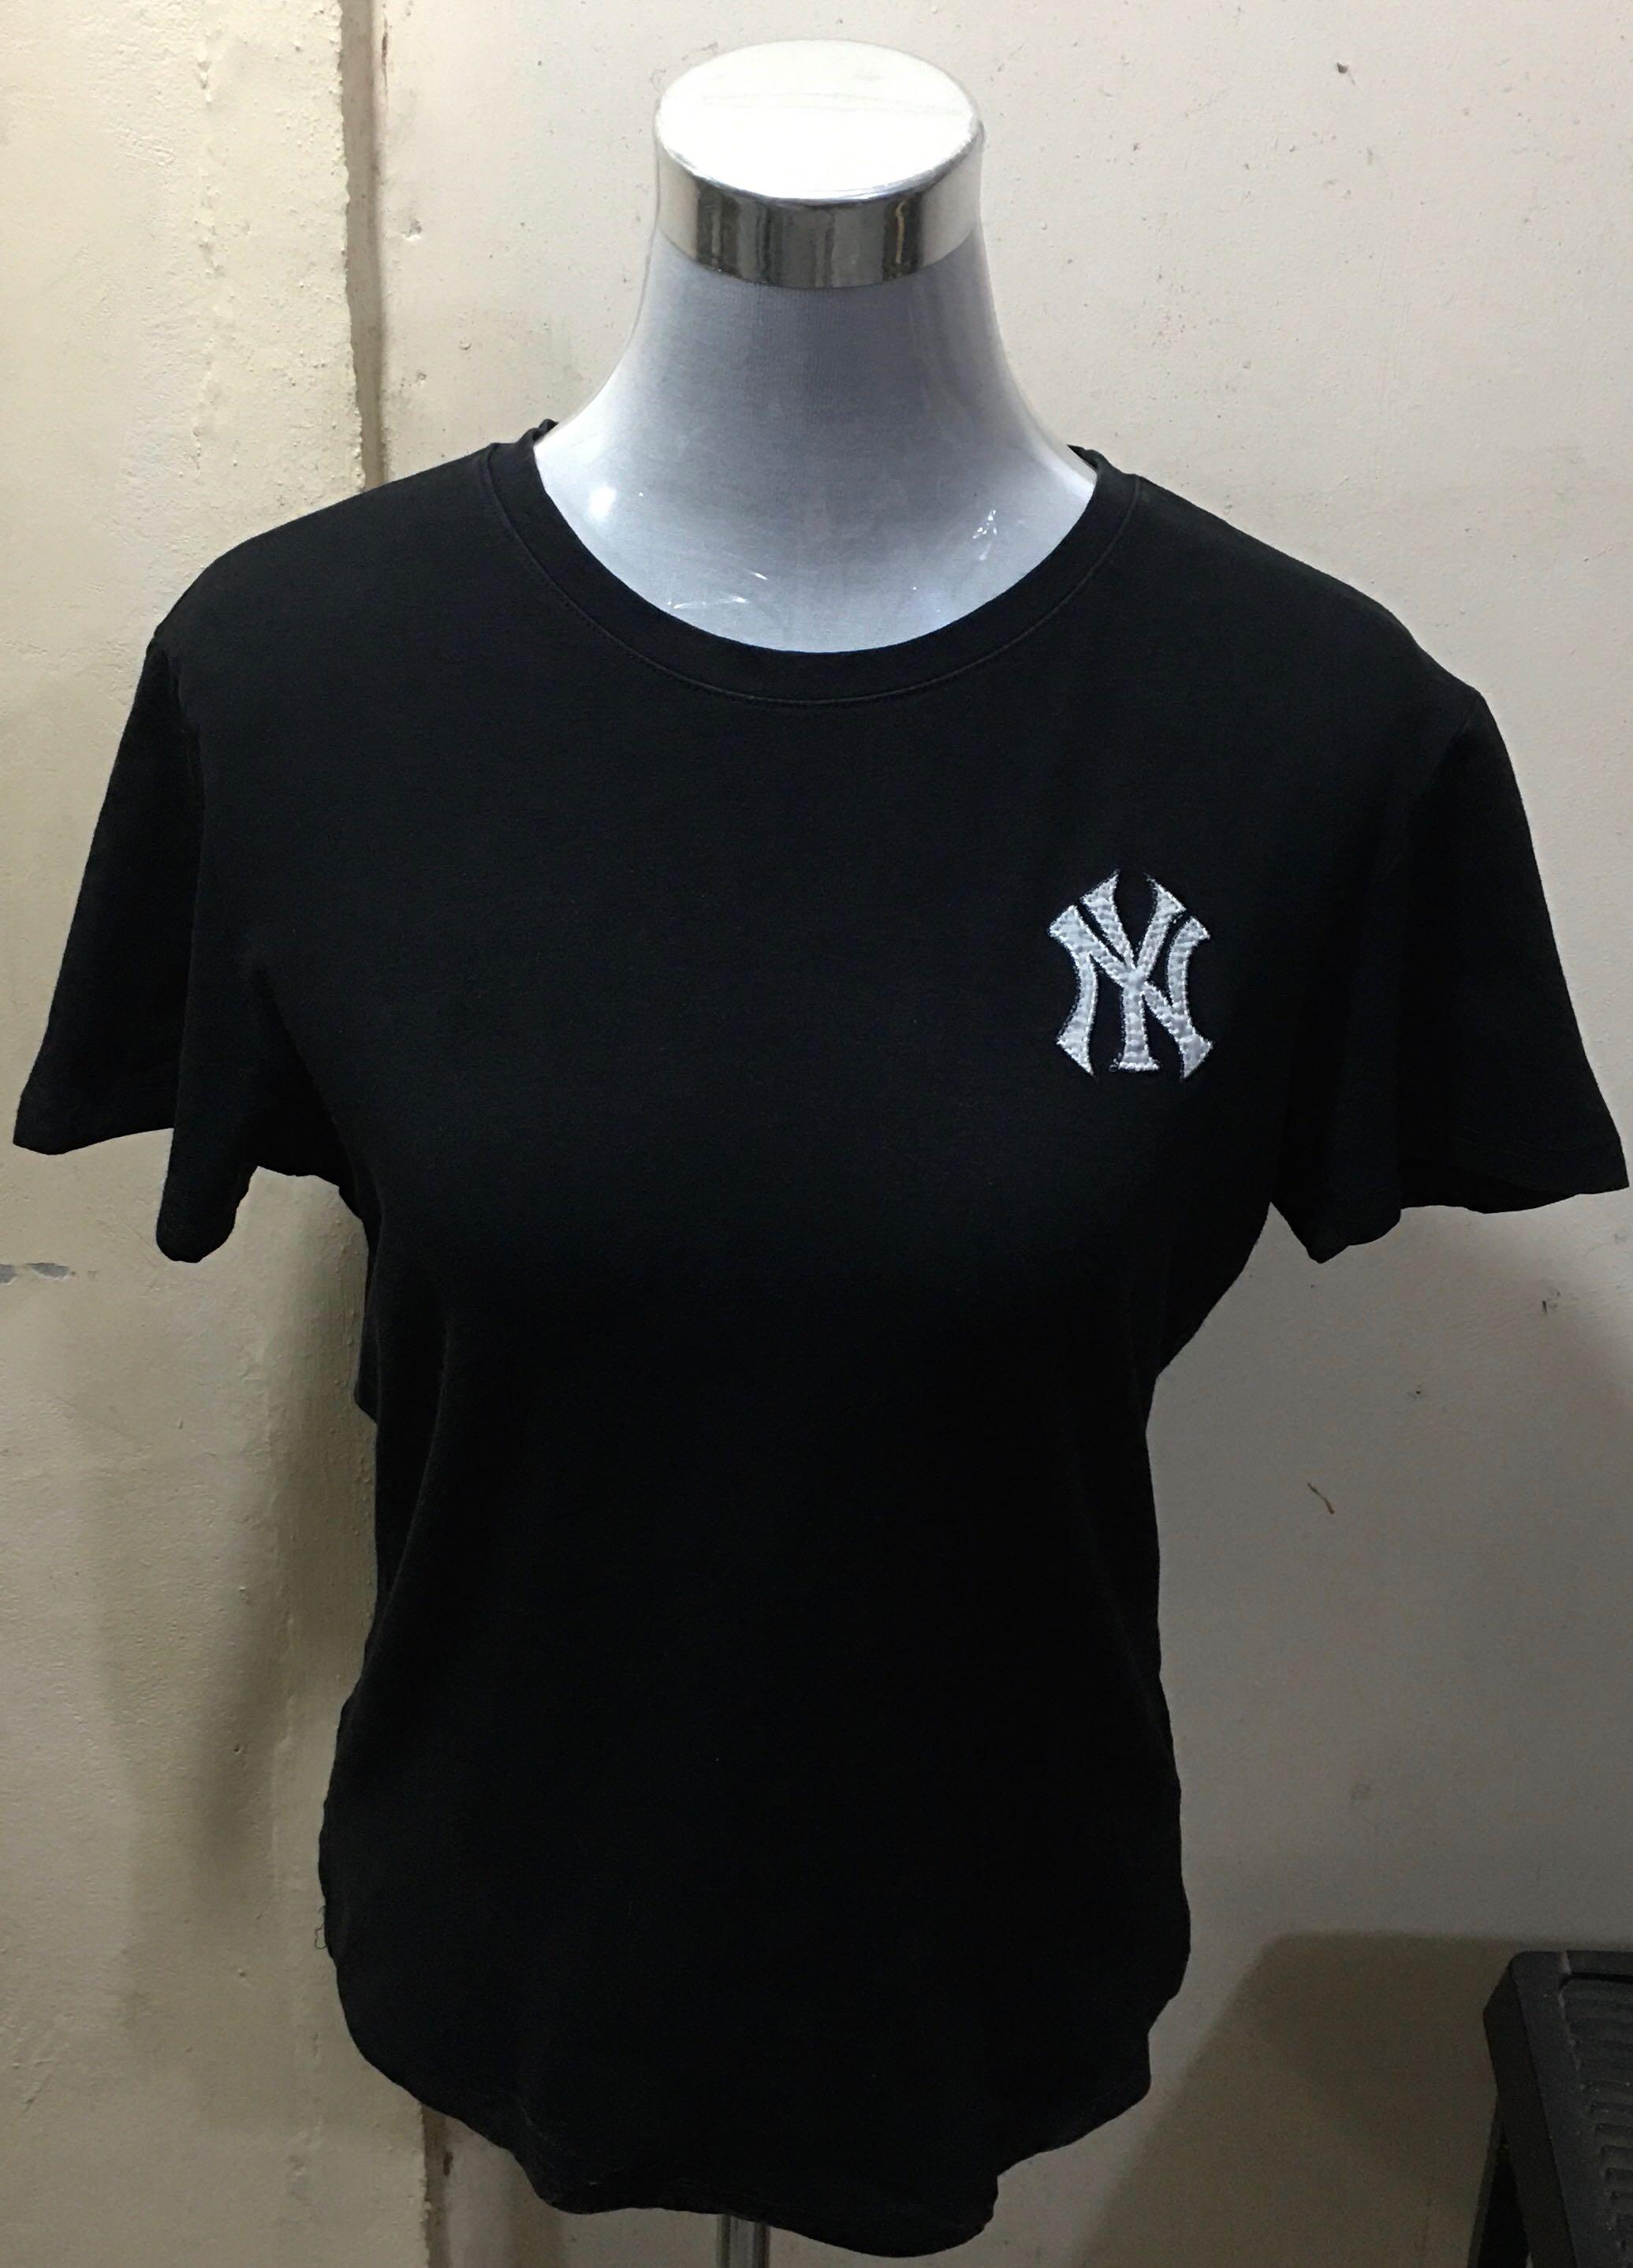 New York Yankees National League est 1903 shirt - Dalatshirt